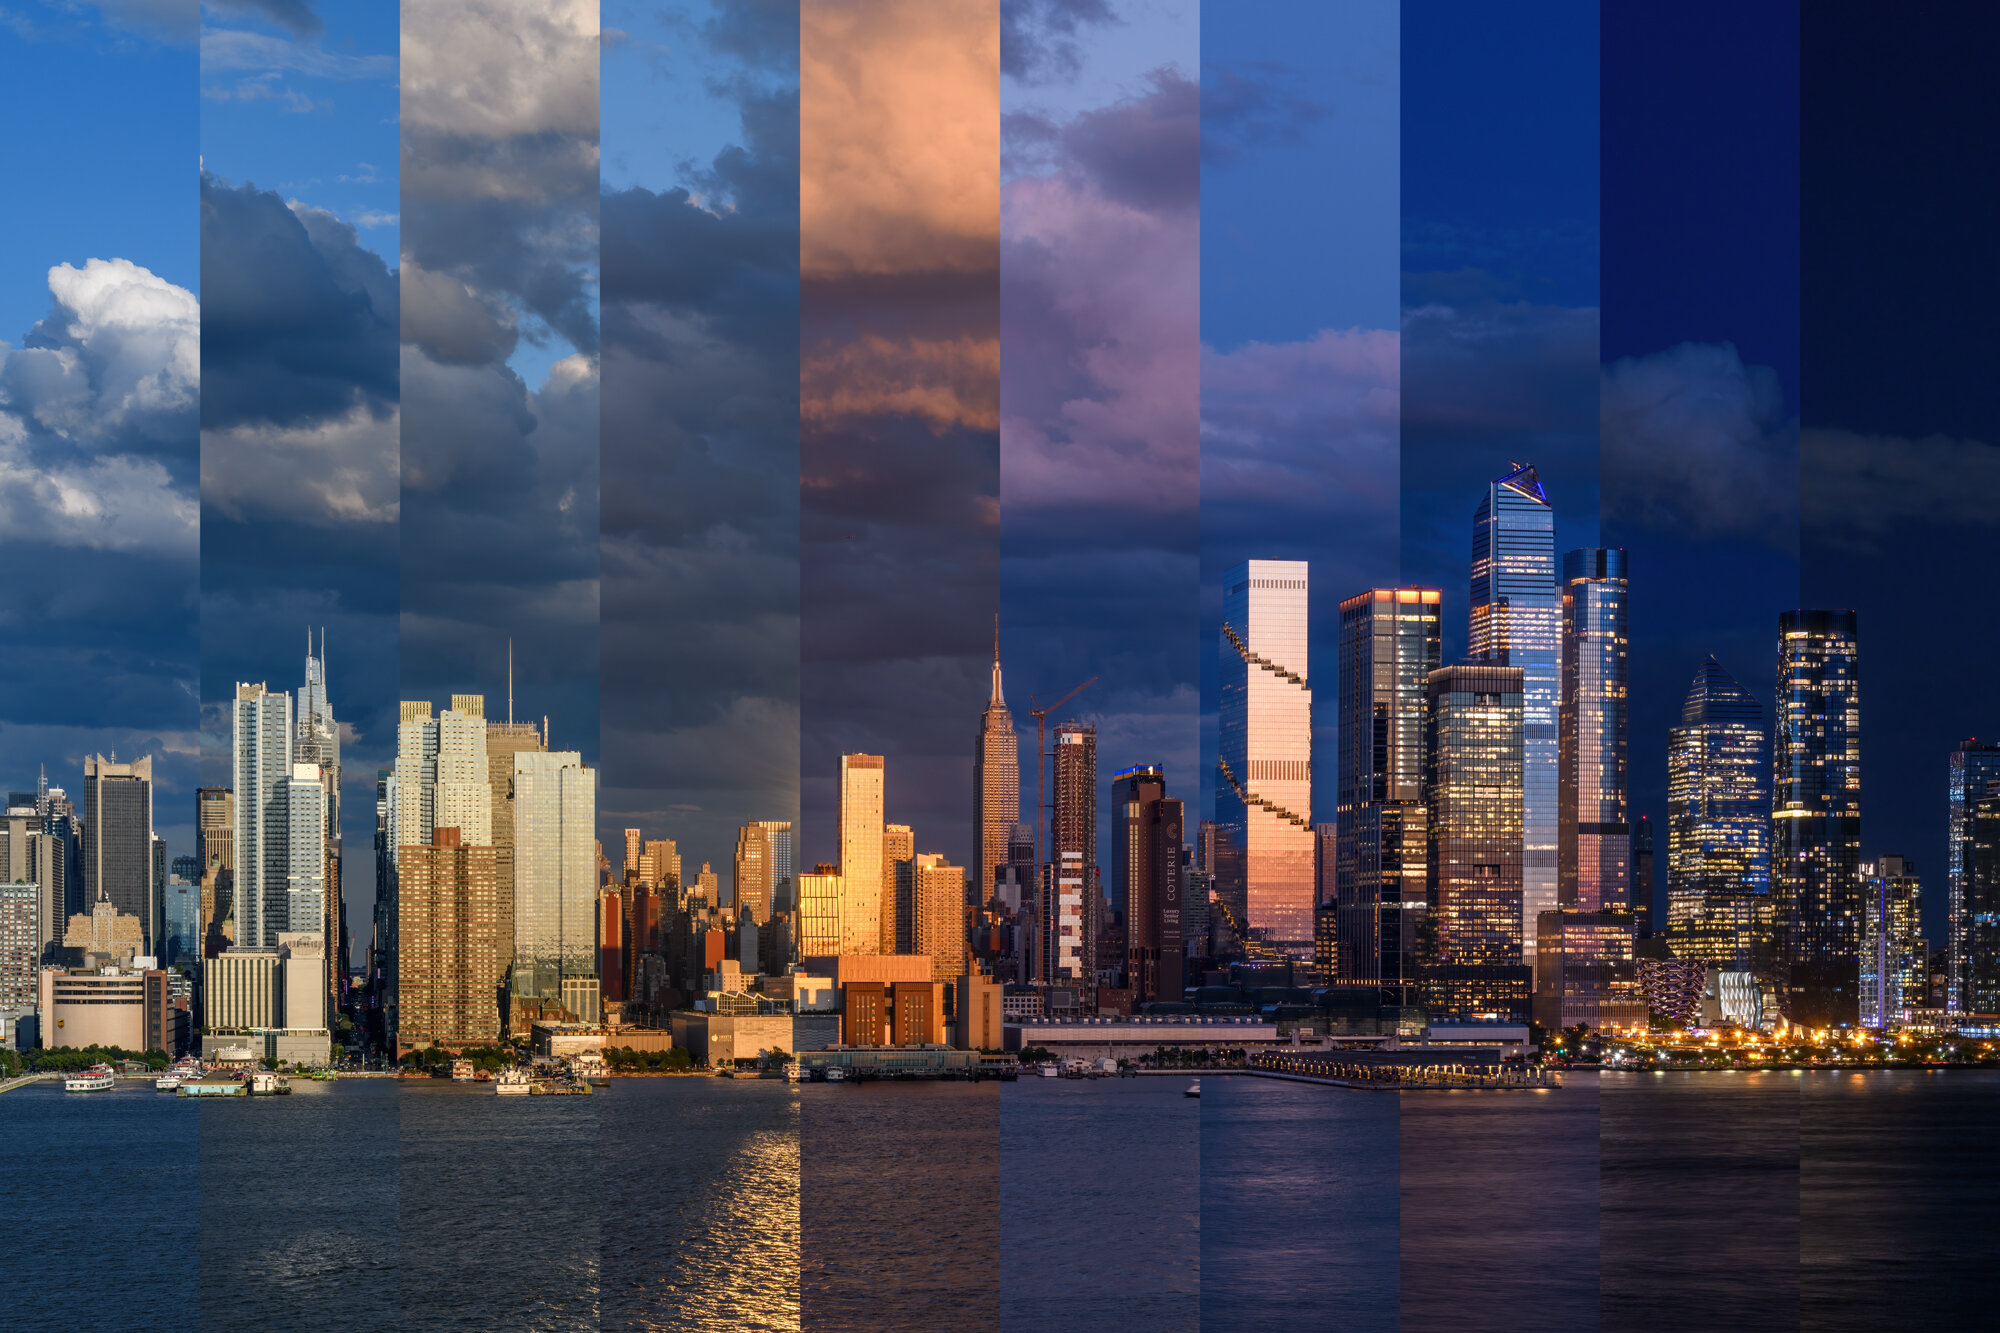 Midtown manhattan looks like this from day to sunset to night
曼哈顿中城从白天到日落到夜晚，这天本来是奔着录课程去的，结果课没录出来，却拍到了这个位置的完美日转夜
#NewYorkCity #WhatsGoodNYC #VisitNYC #NYCTourism #NYCorNowhere⁠ #ILoveNY